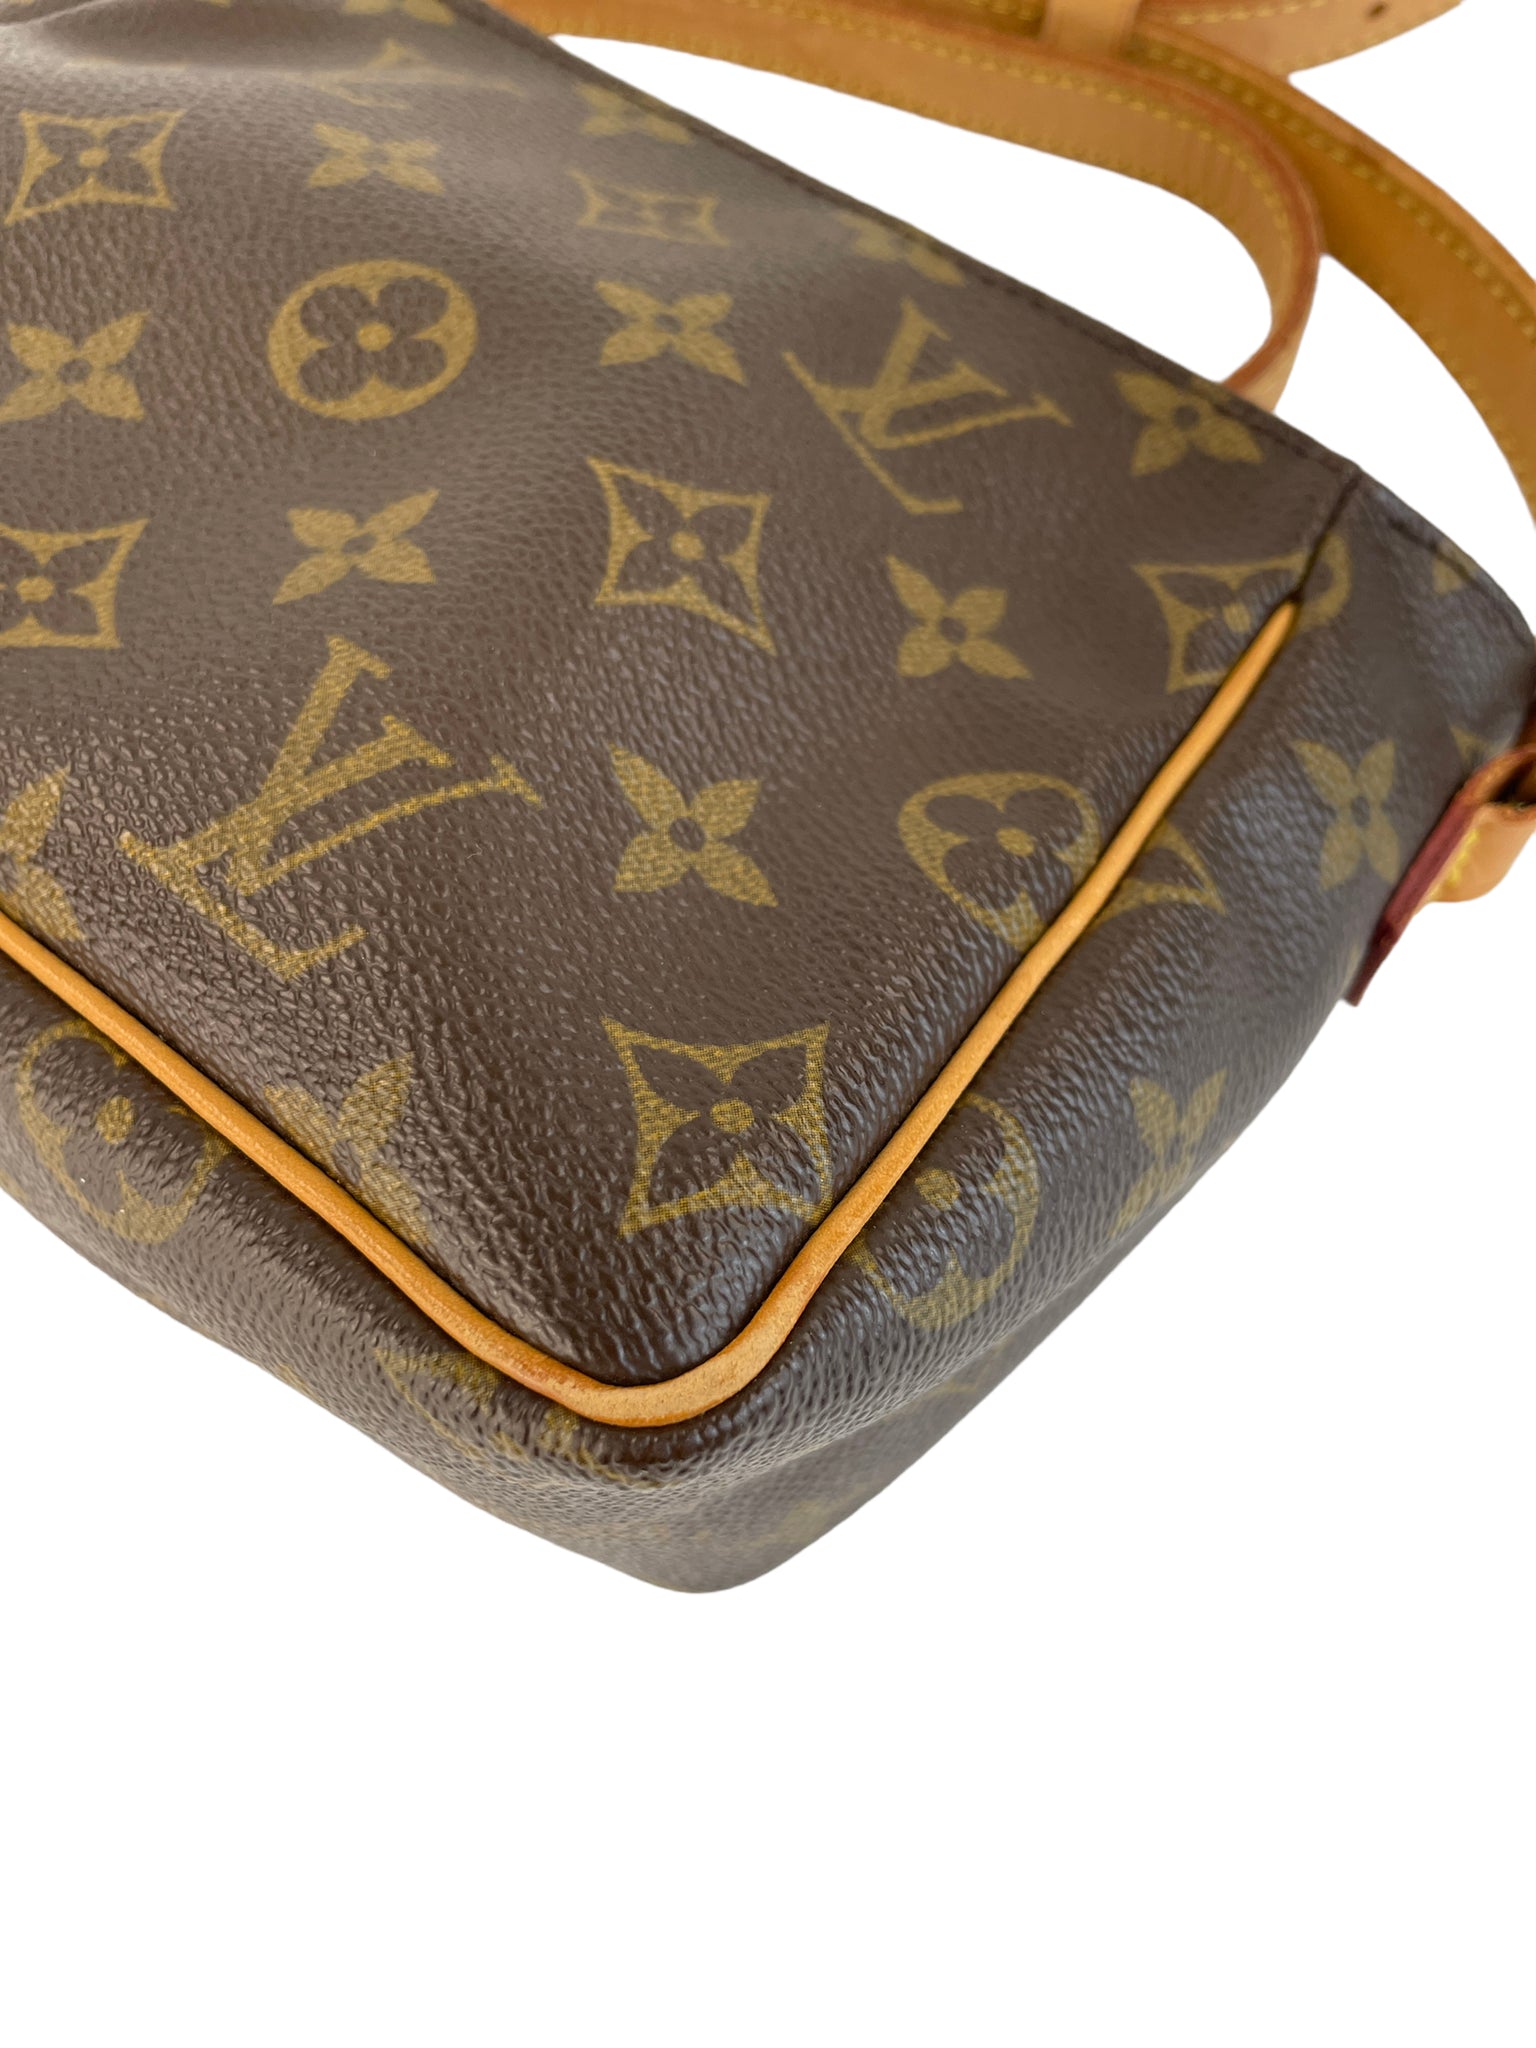 Louis Vuitton Viva Cite Pm Crossbody Bag At Jill's Consignment